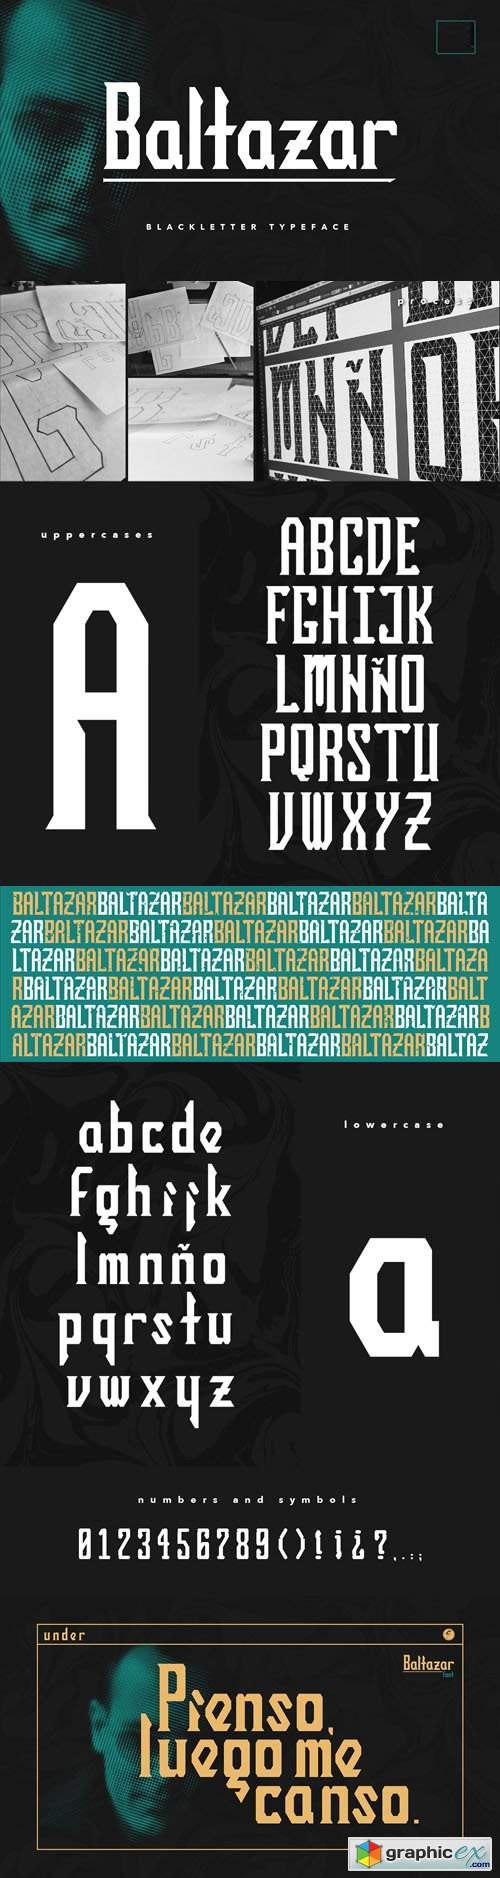 BALTAZAR Blackletter Typeface